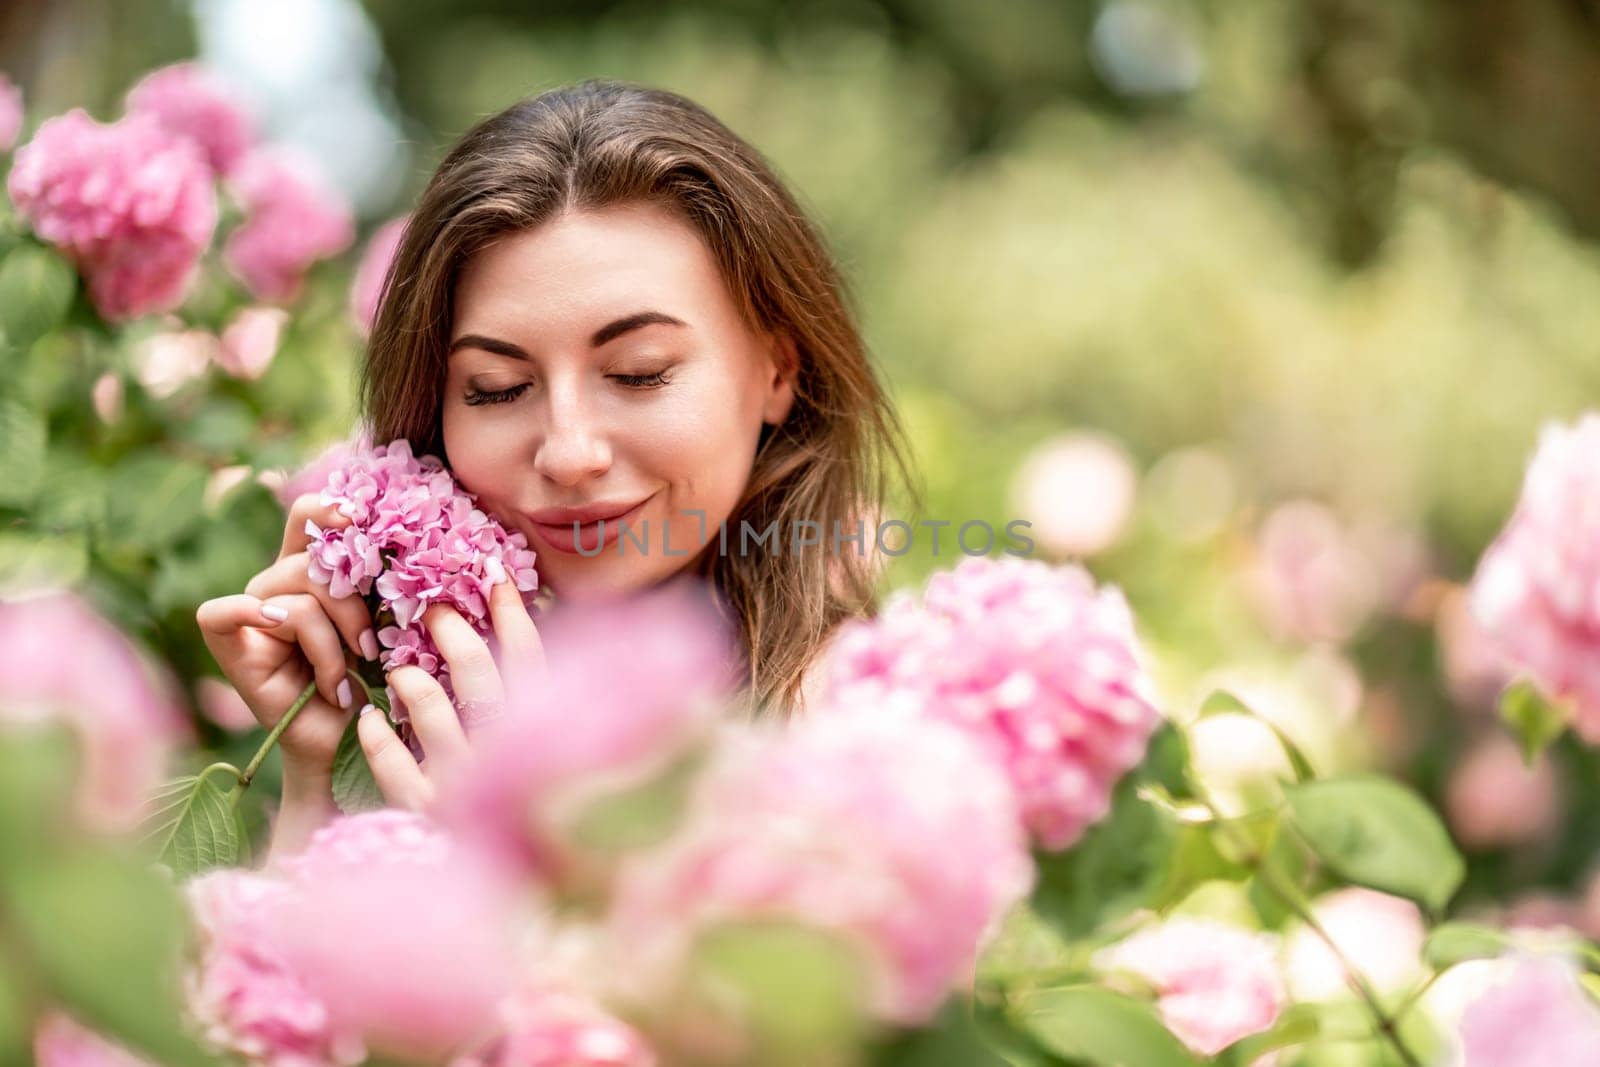 Hydrangeas Happy woman in pink dress amid hydrangeas. Large pink hydrangea caps surround woman. Sunny outdoor setting. Showcasing happy woman amid hydrangea bloom. by Matiunina